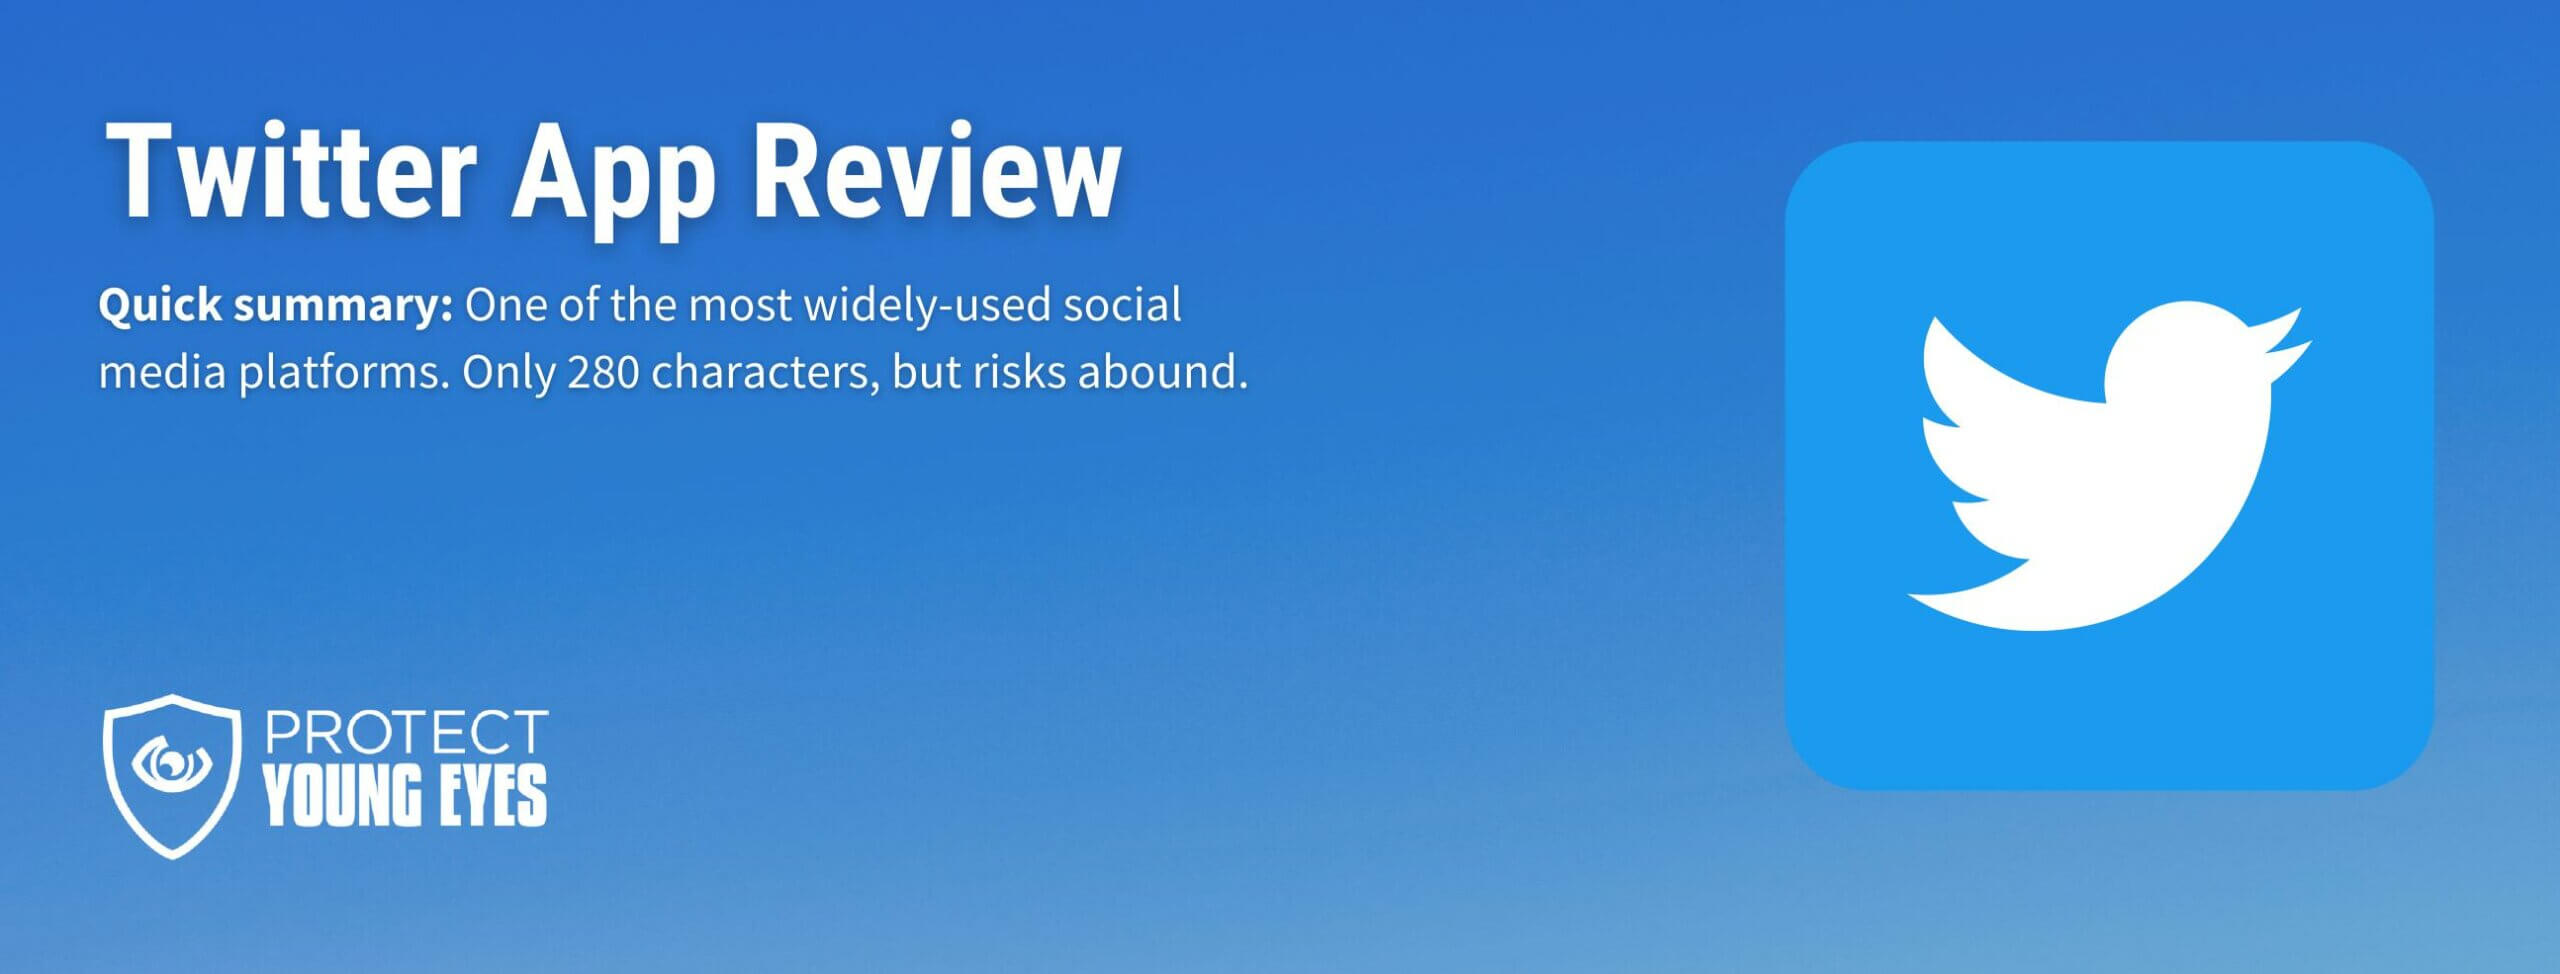 Twitter Header Image App Review PYE